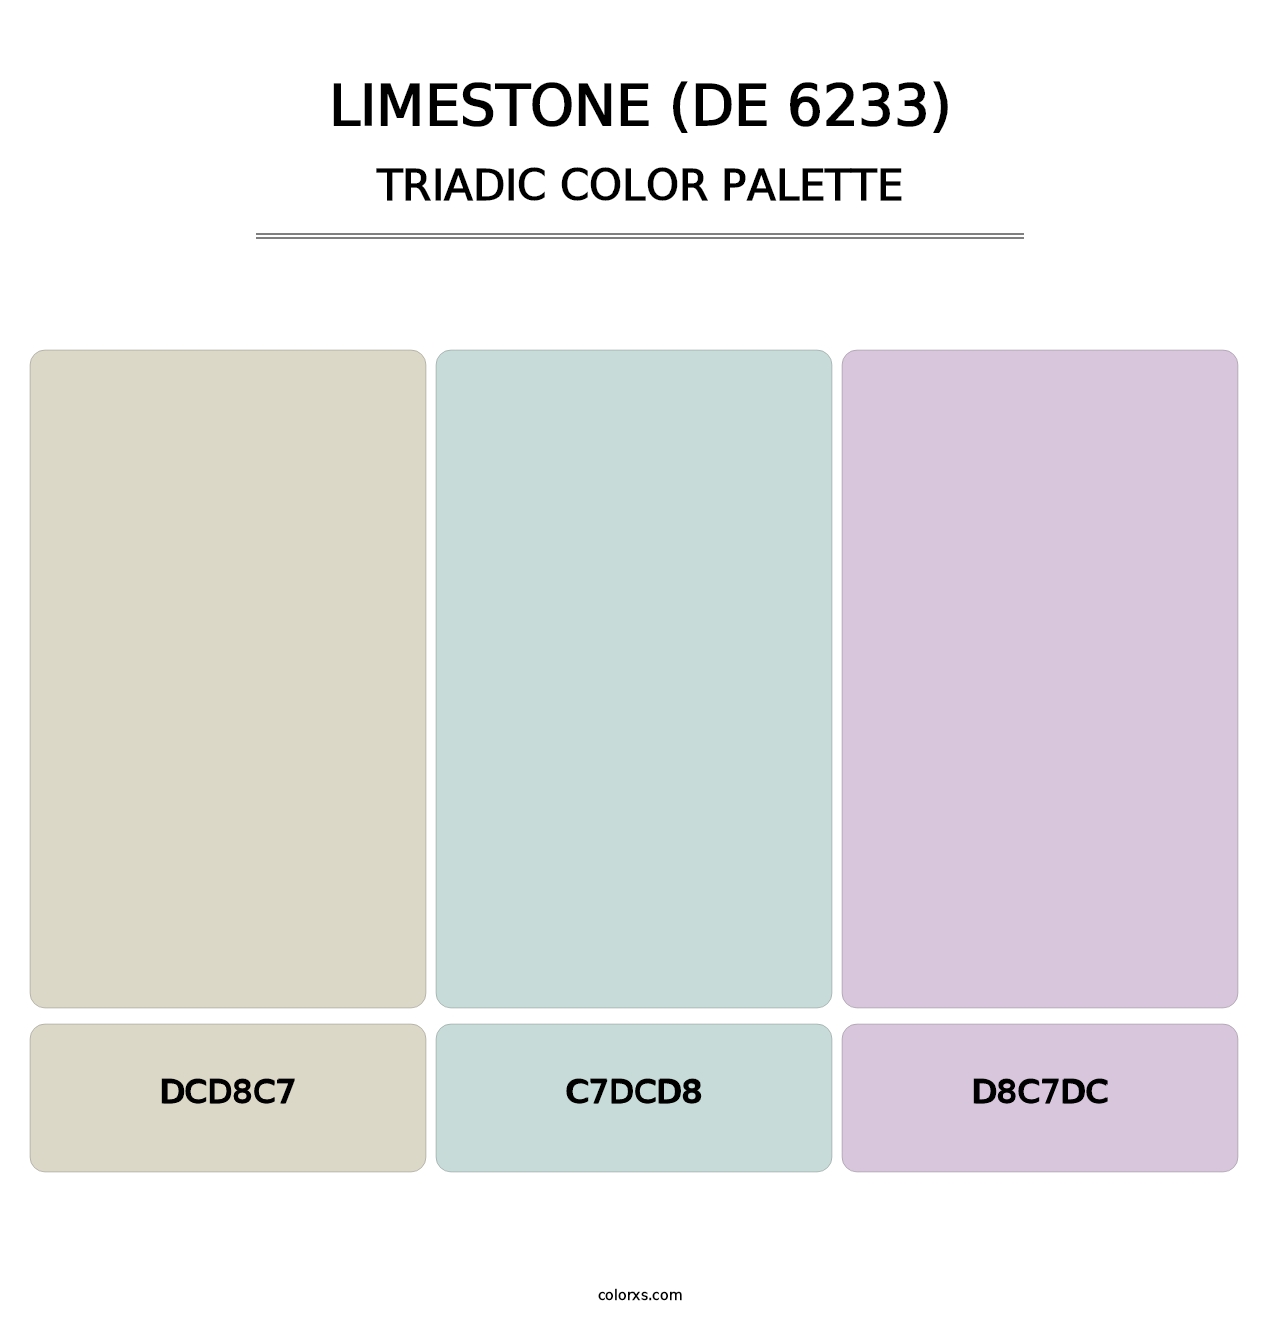 Limestone (DE 6233) - Triadic Color Palette